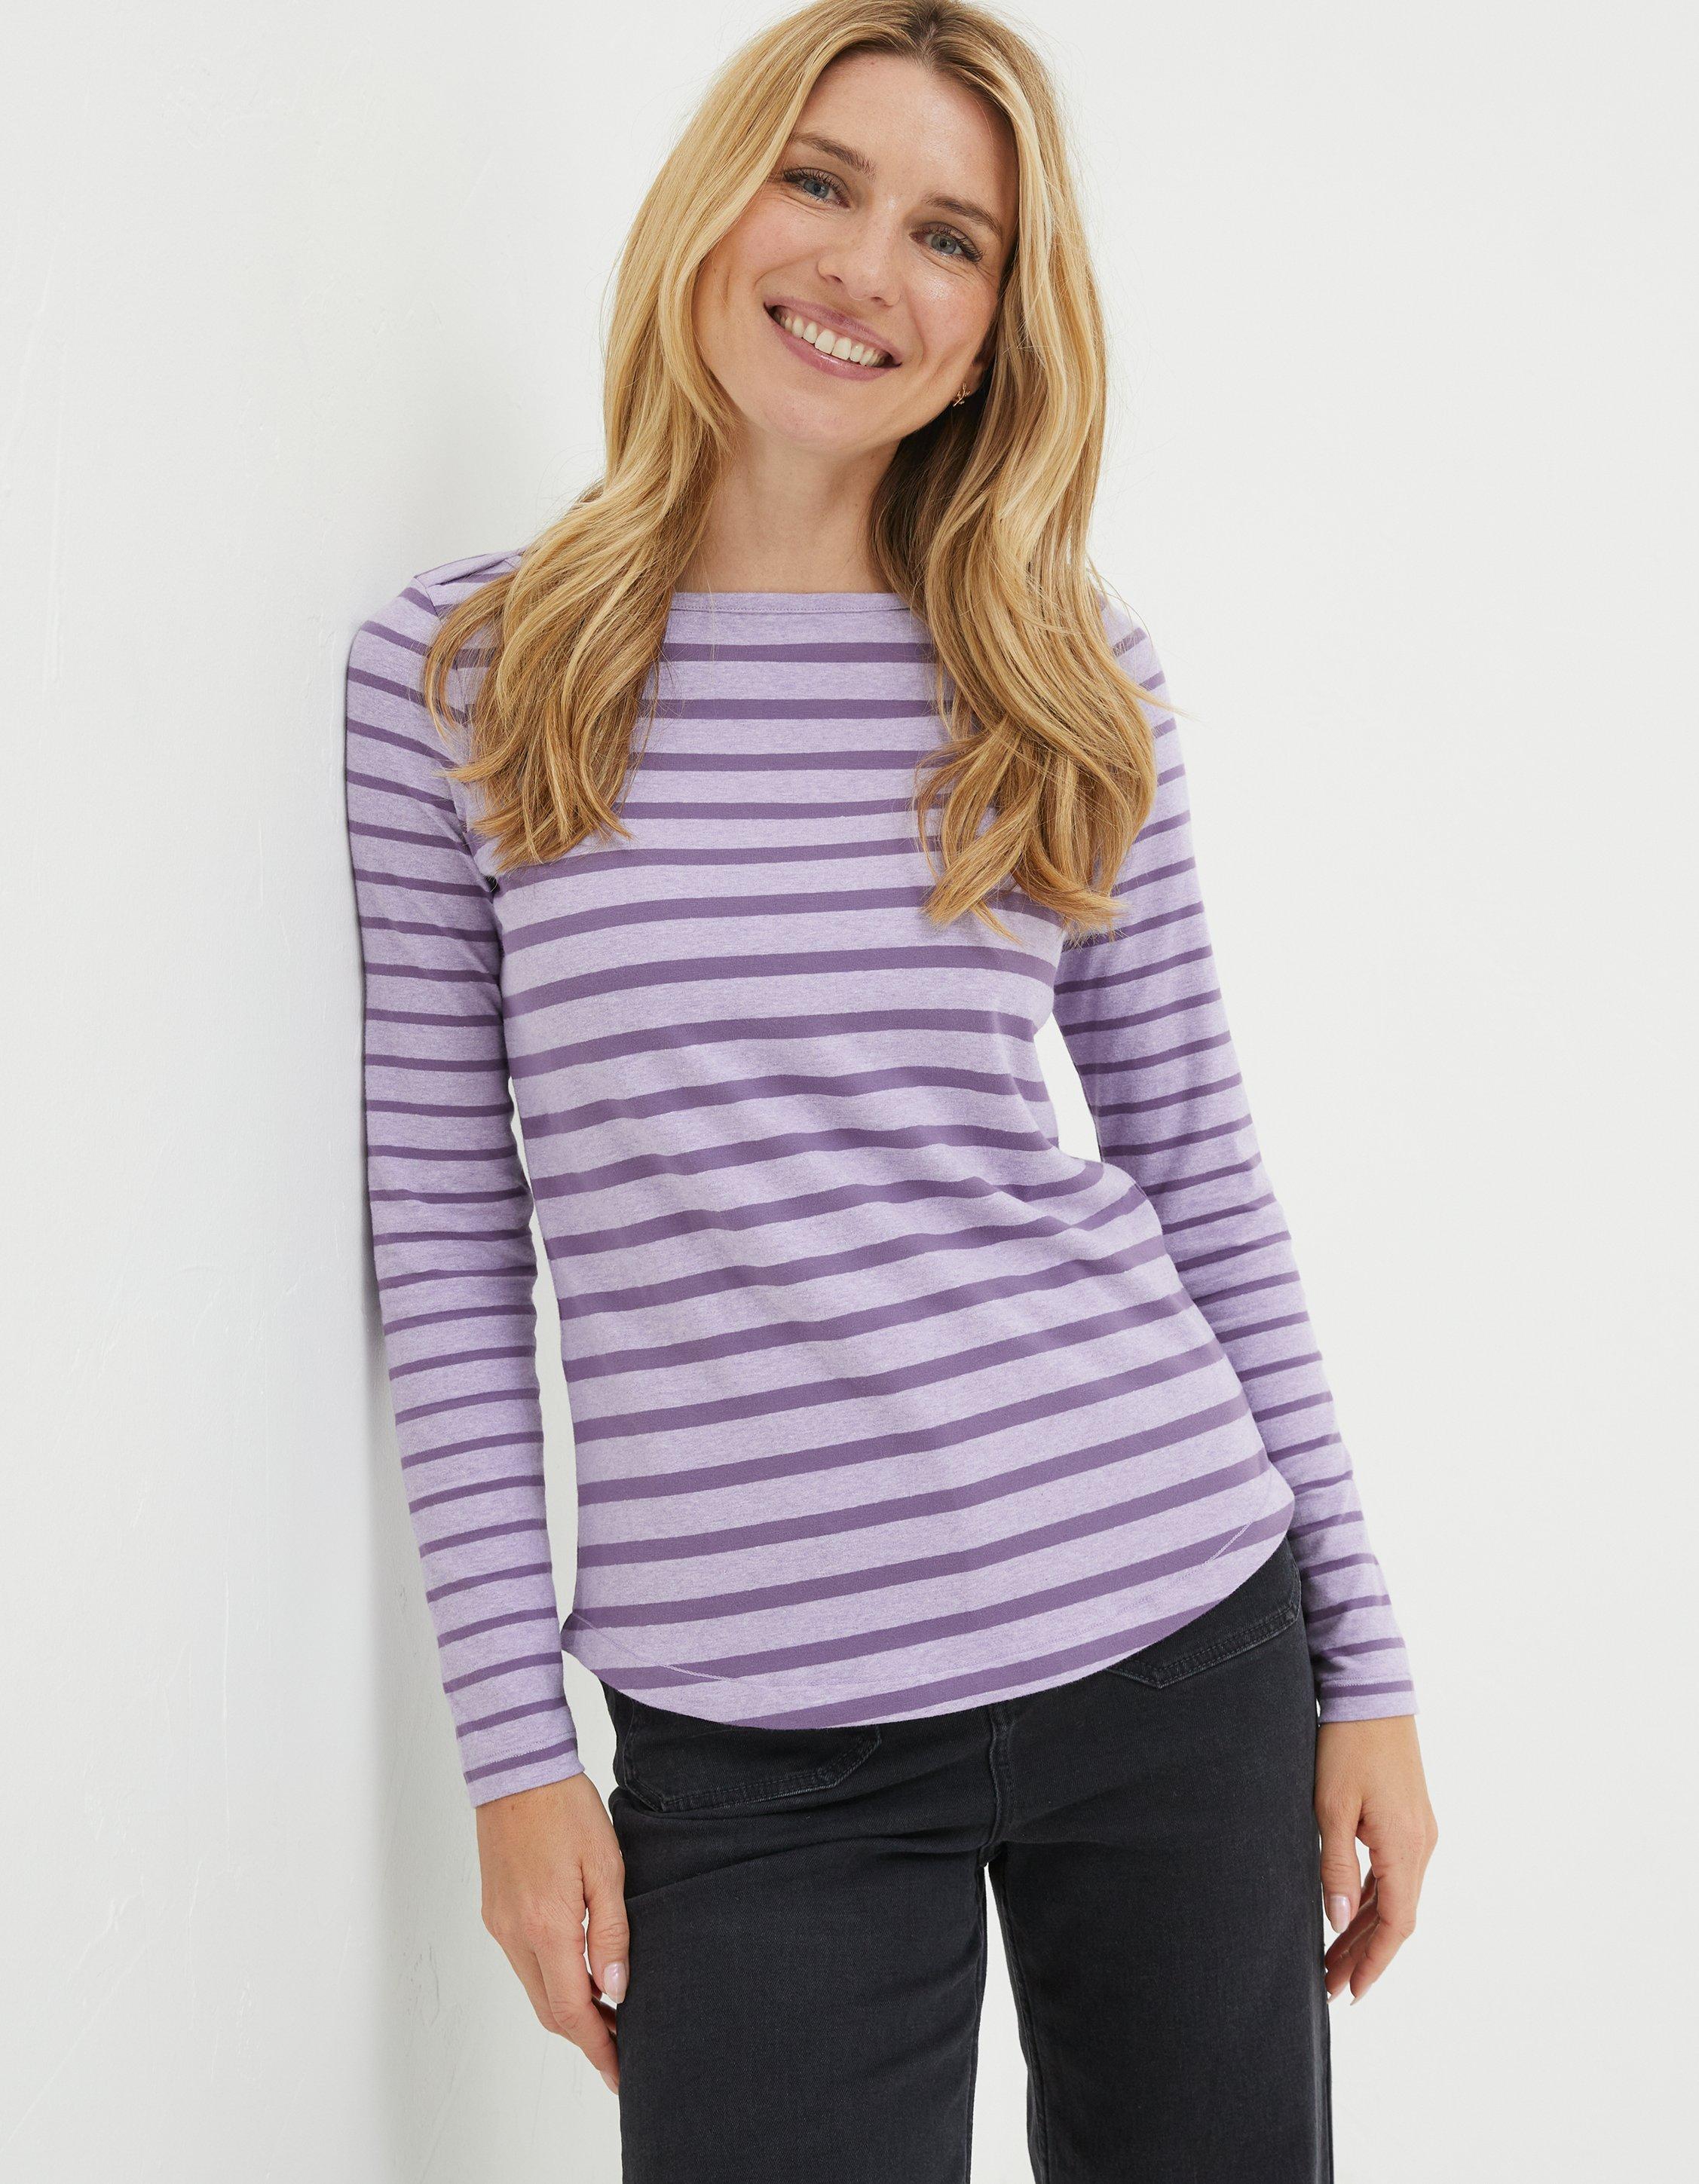 Women's T-Shirts Purple Organic Cotton Tops